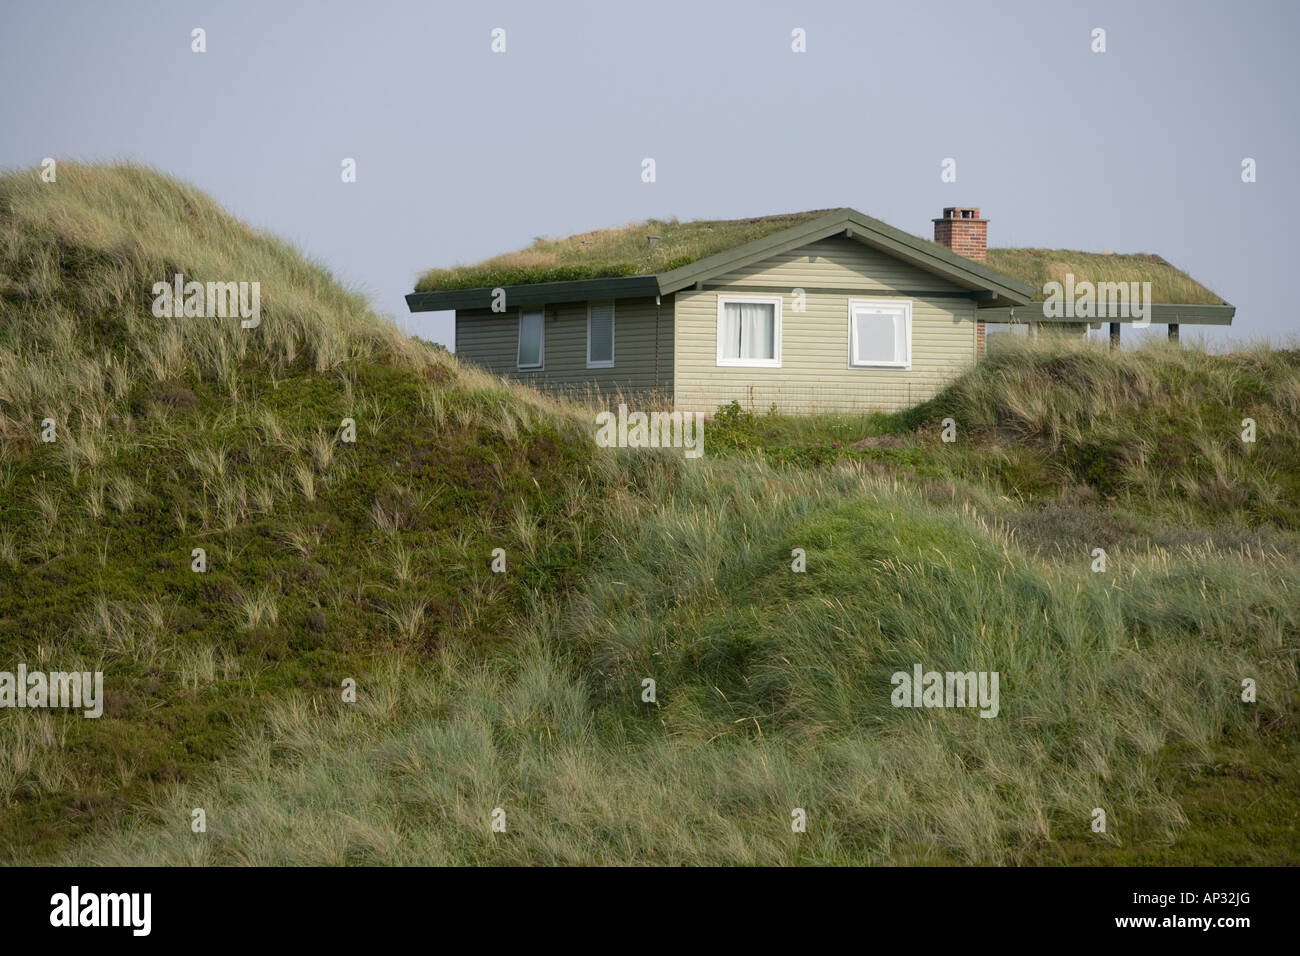 Vacation Home in Dunes, Ferienhaus in Duenen, Henne Strand, Central Jutland, Denmark Stock Photo